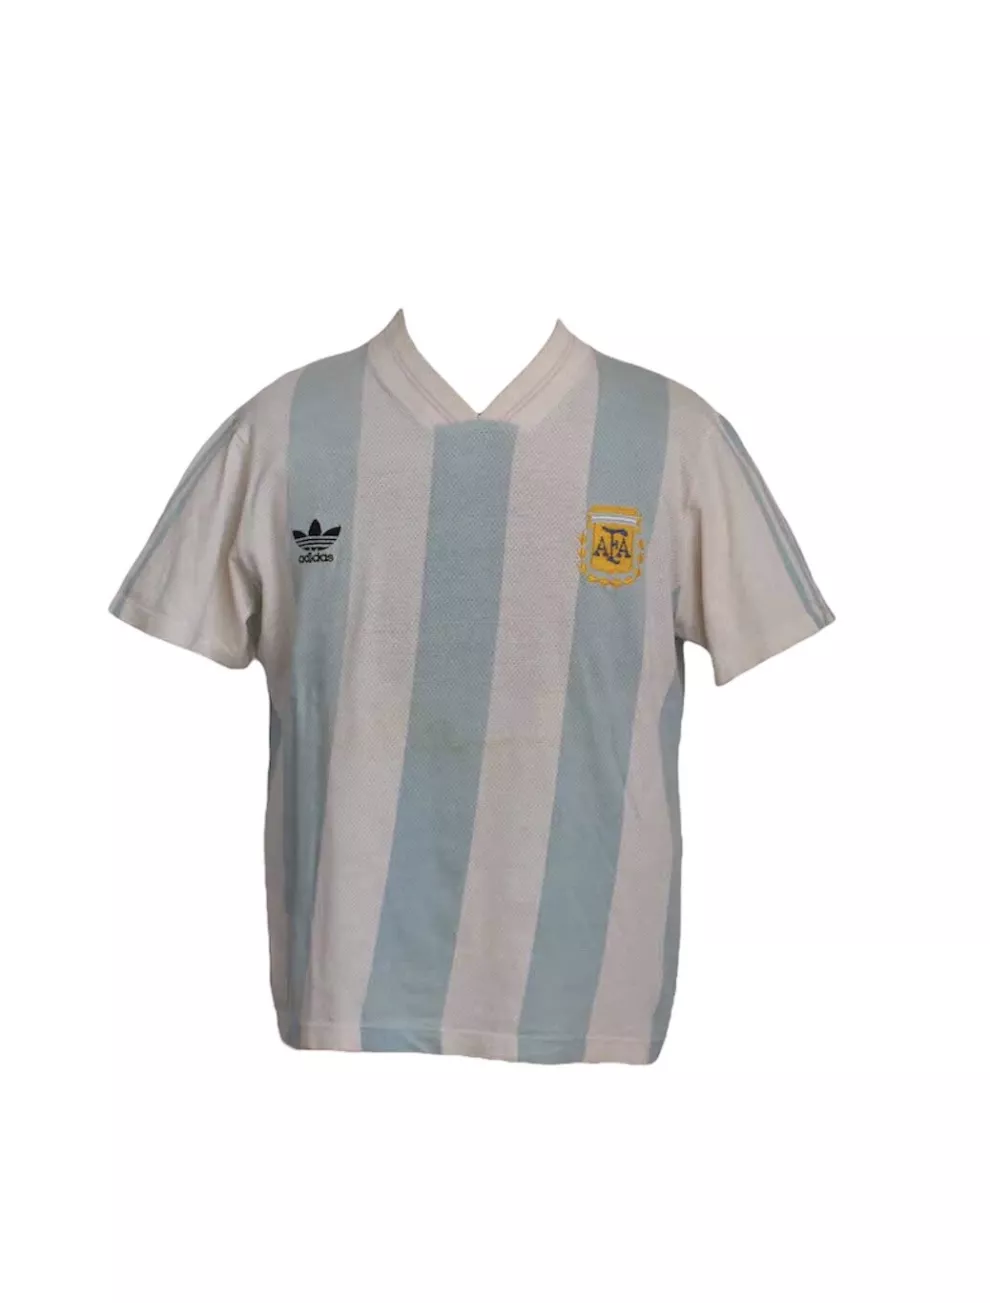 Camiseta de Fernando Redondo (1993)